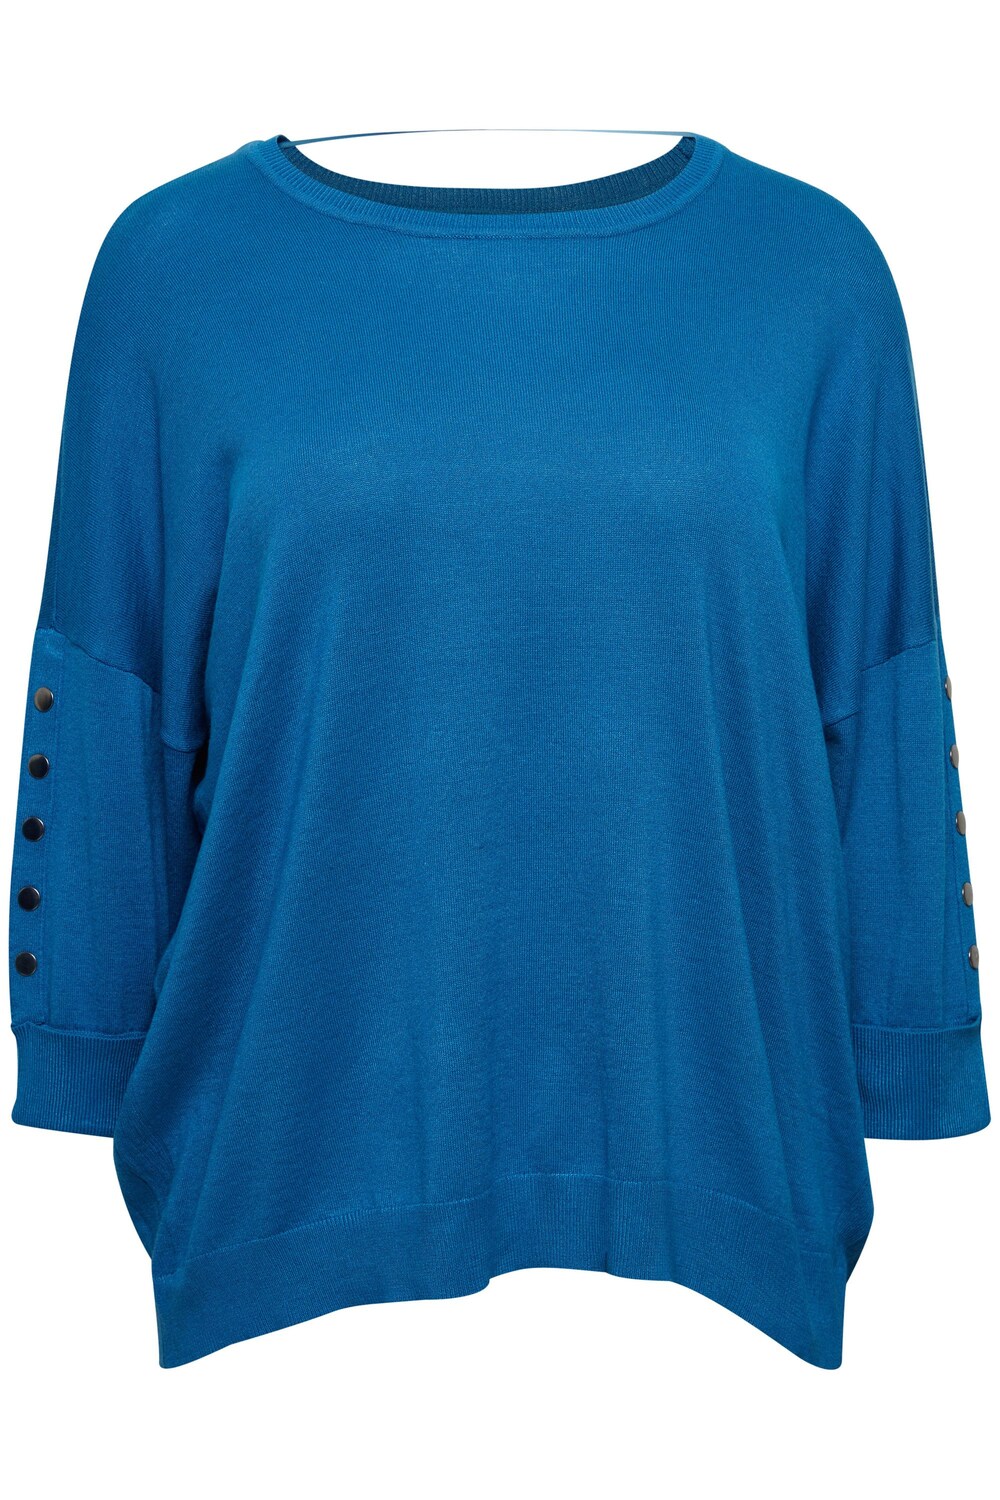 Рубашка Fransa Curve, синий платье fransa frfemelva синий